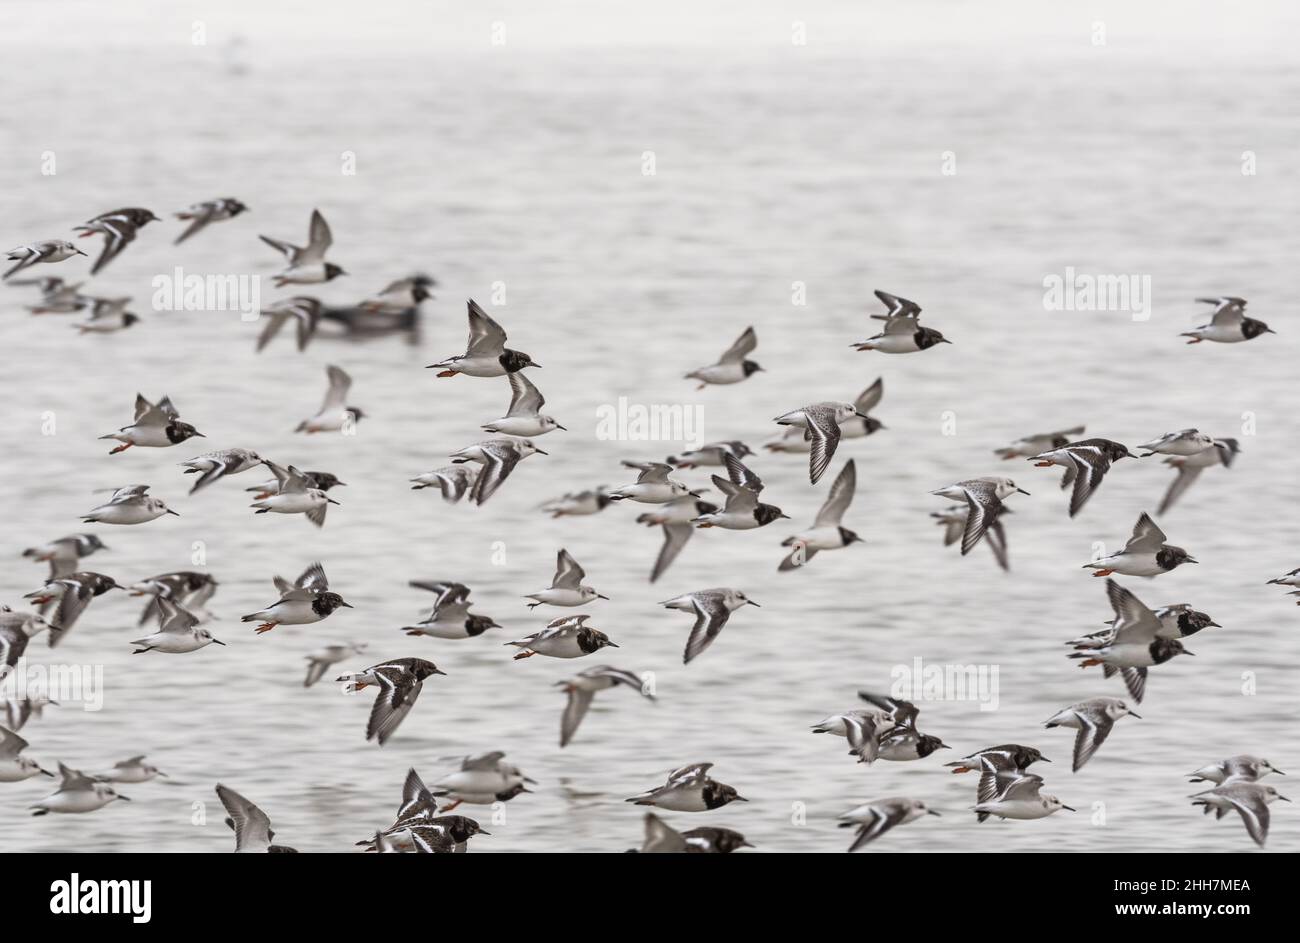 Mixed flock of flying waders (Sanderlings and Turnstones) Stock Photo